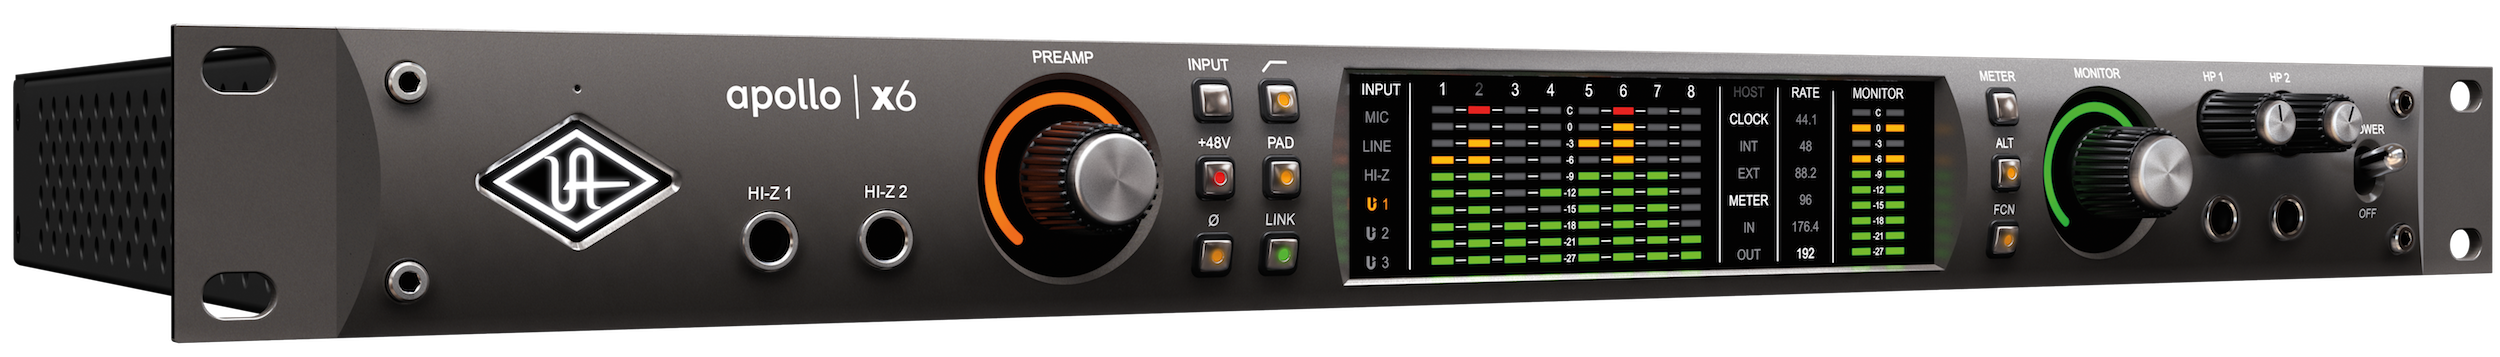 Universal Audio Apollo X6 - Interface de audio thunderbolt - Variation 3